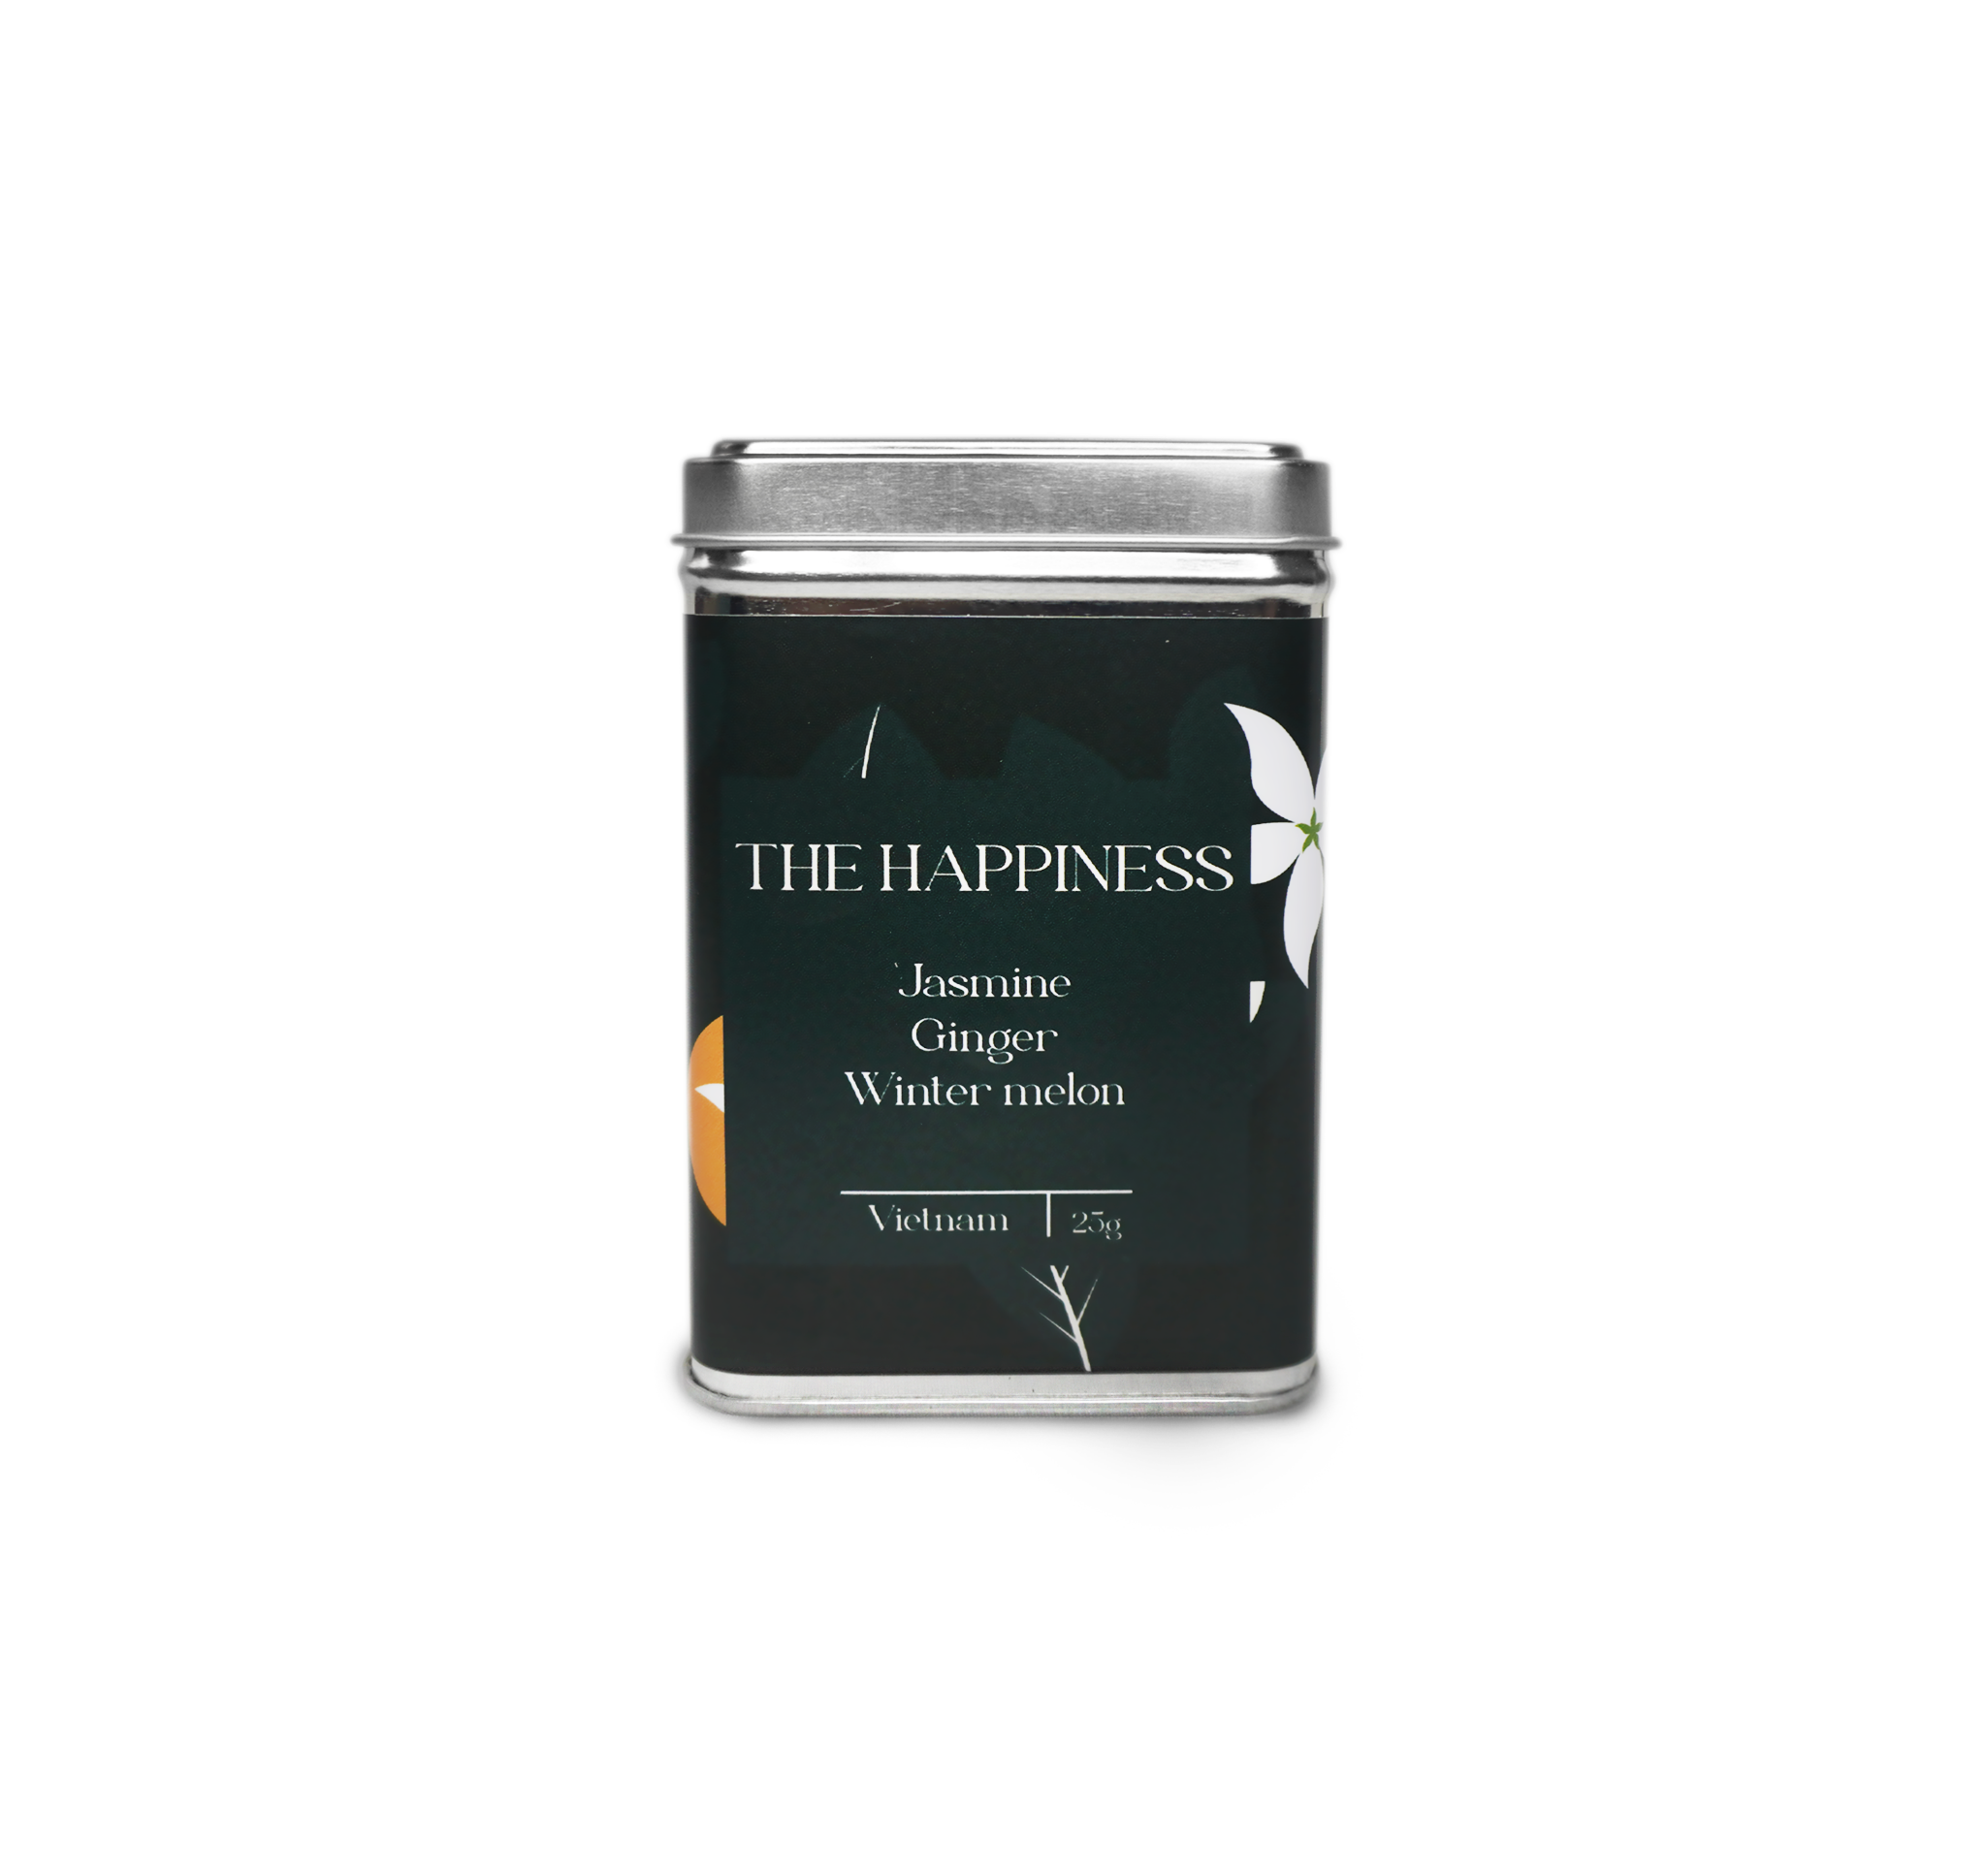  Tea Box The Happiness 